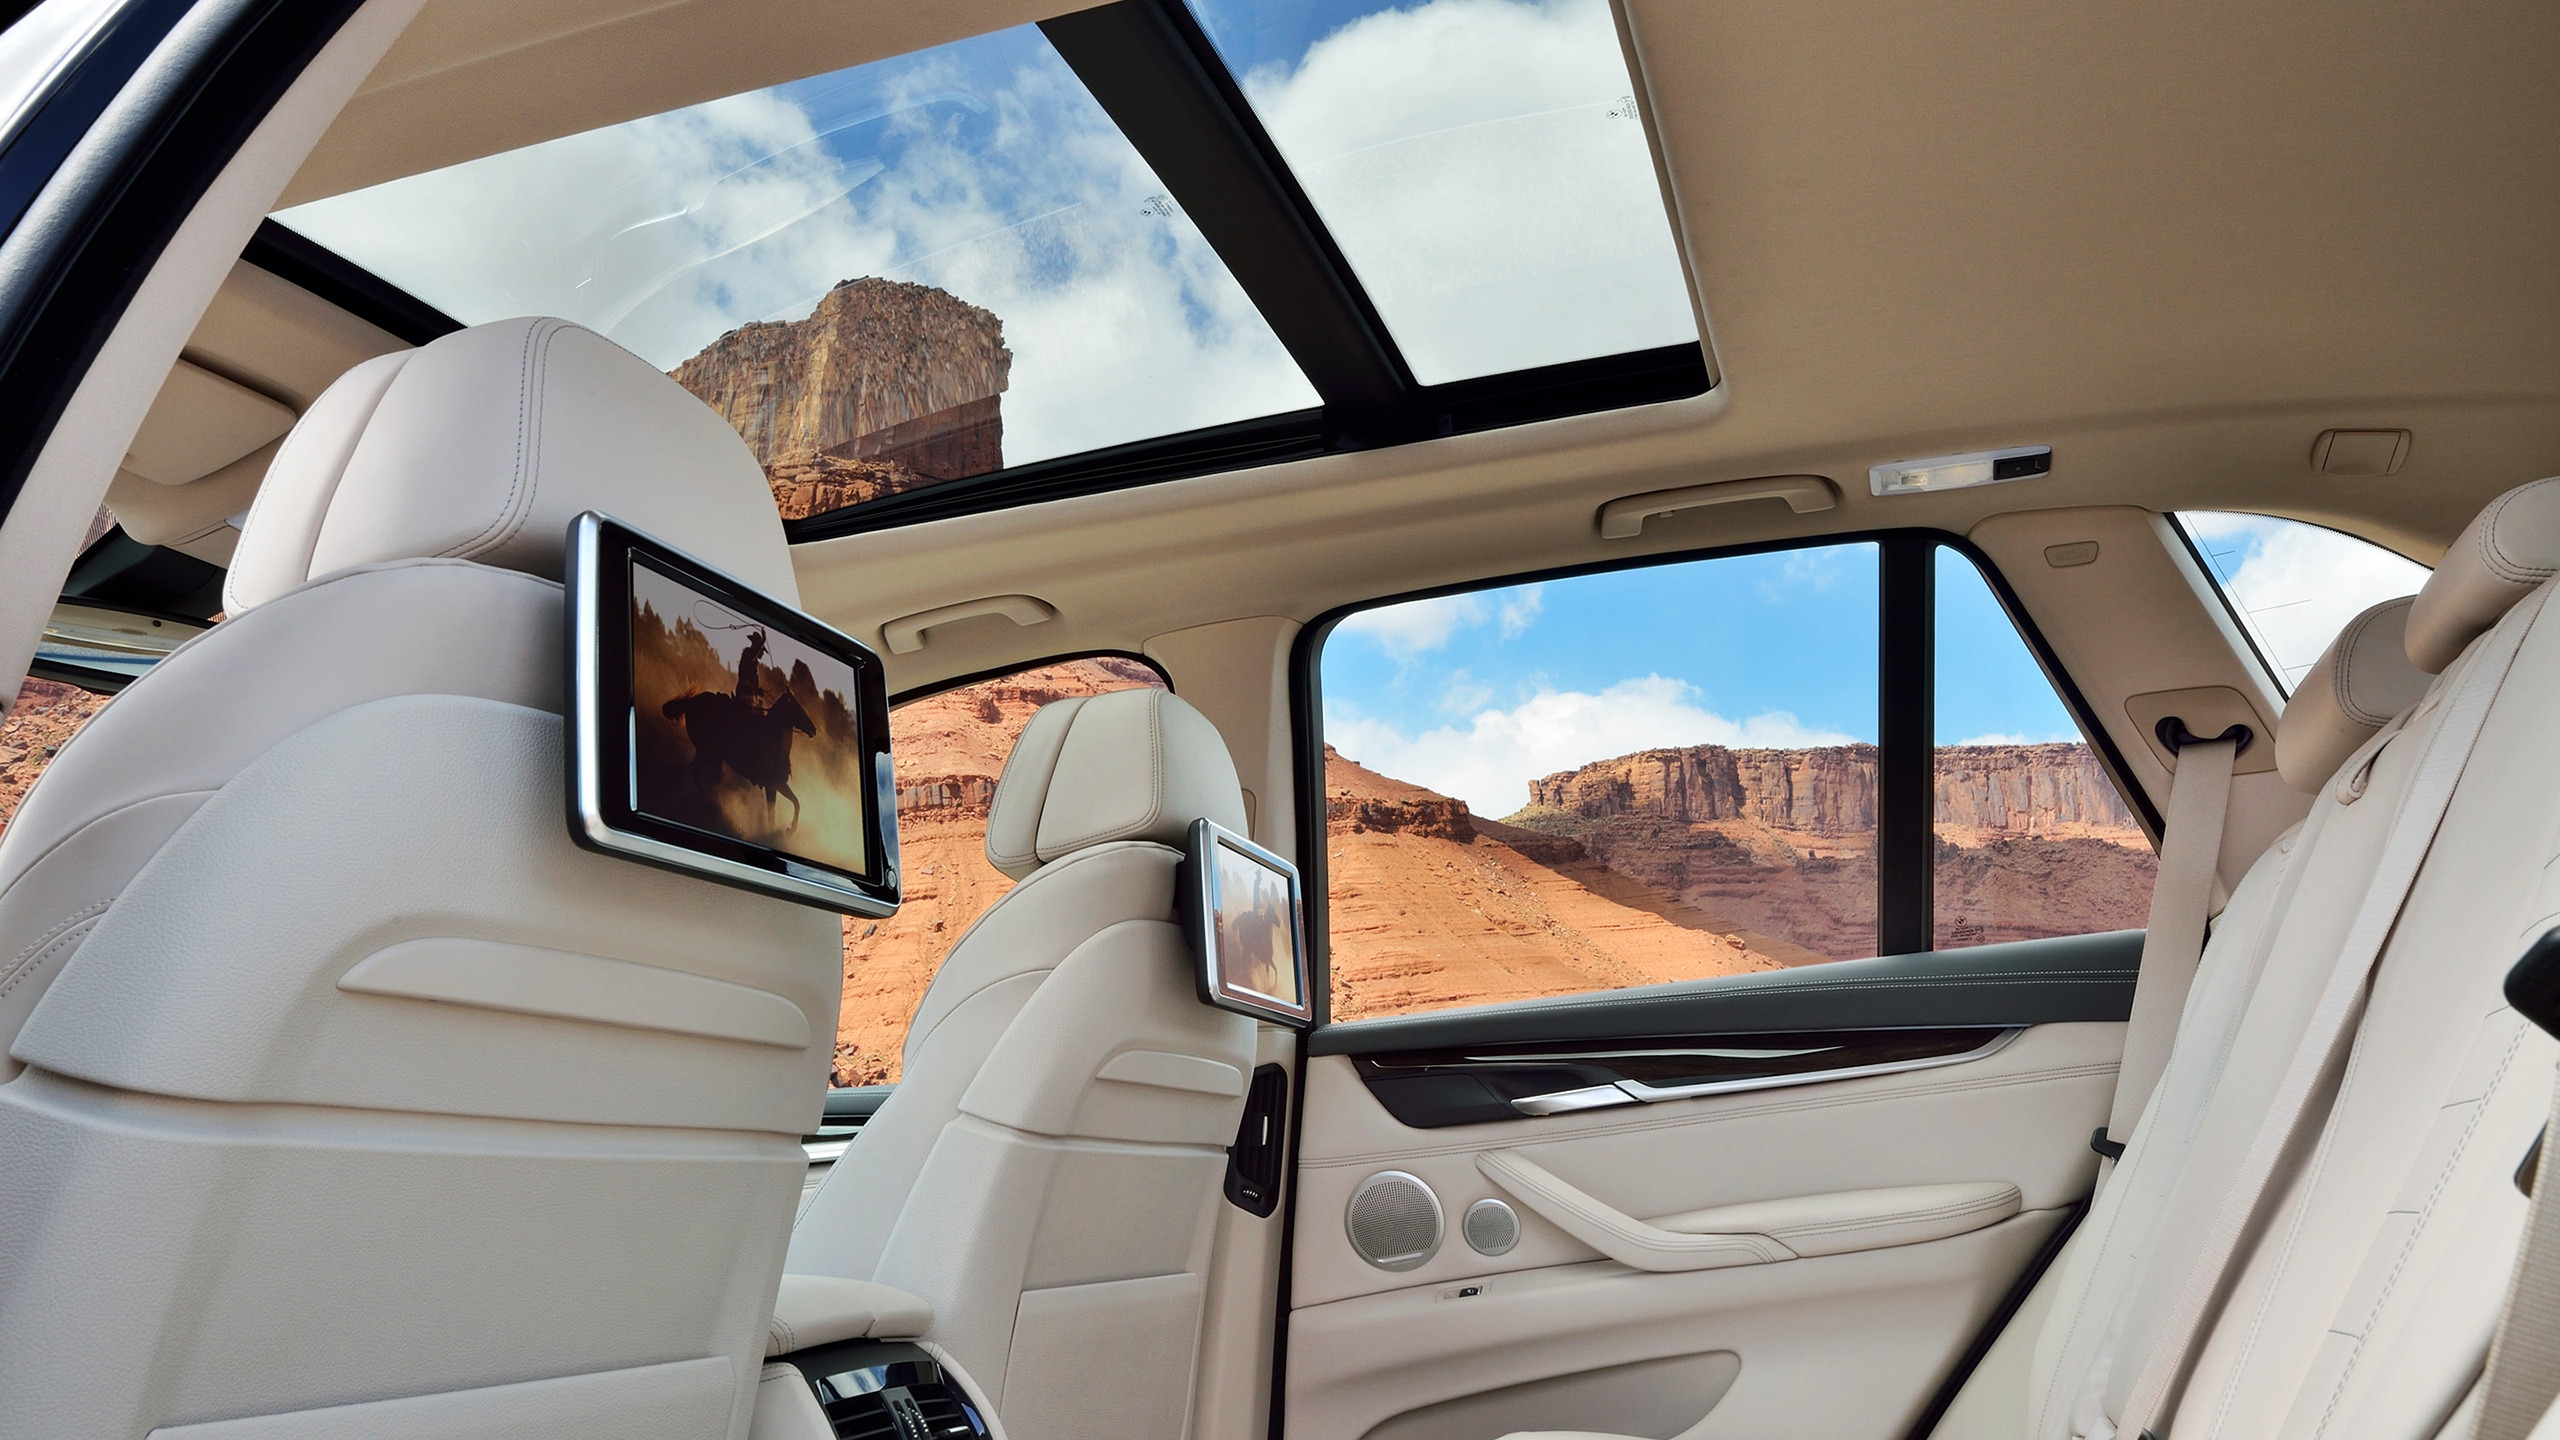 2014 BMW X5 Interior for 2560x1440 HDTV resolution